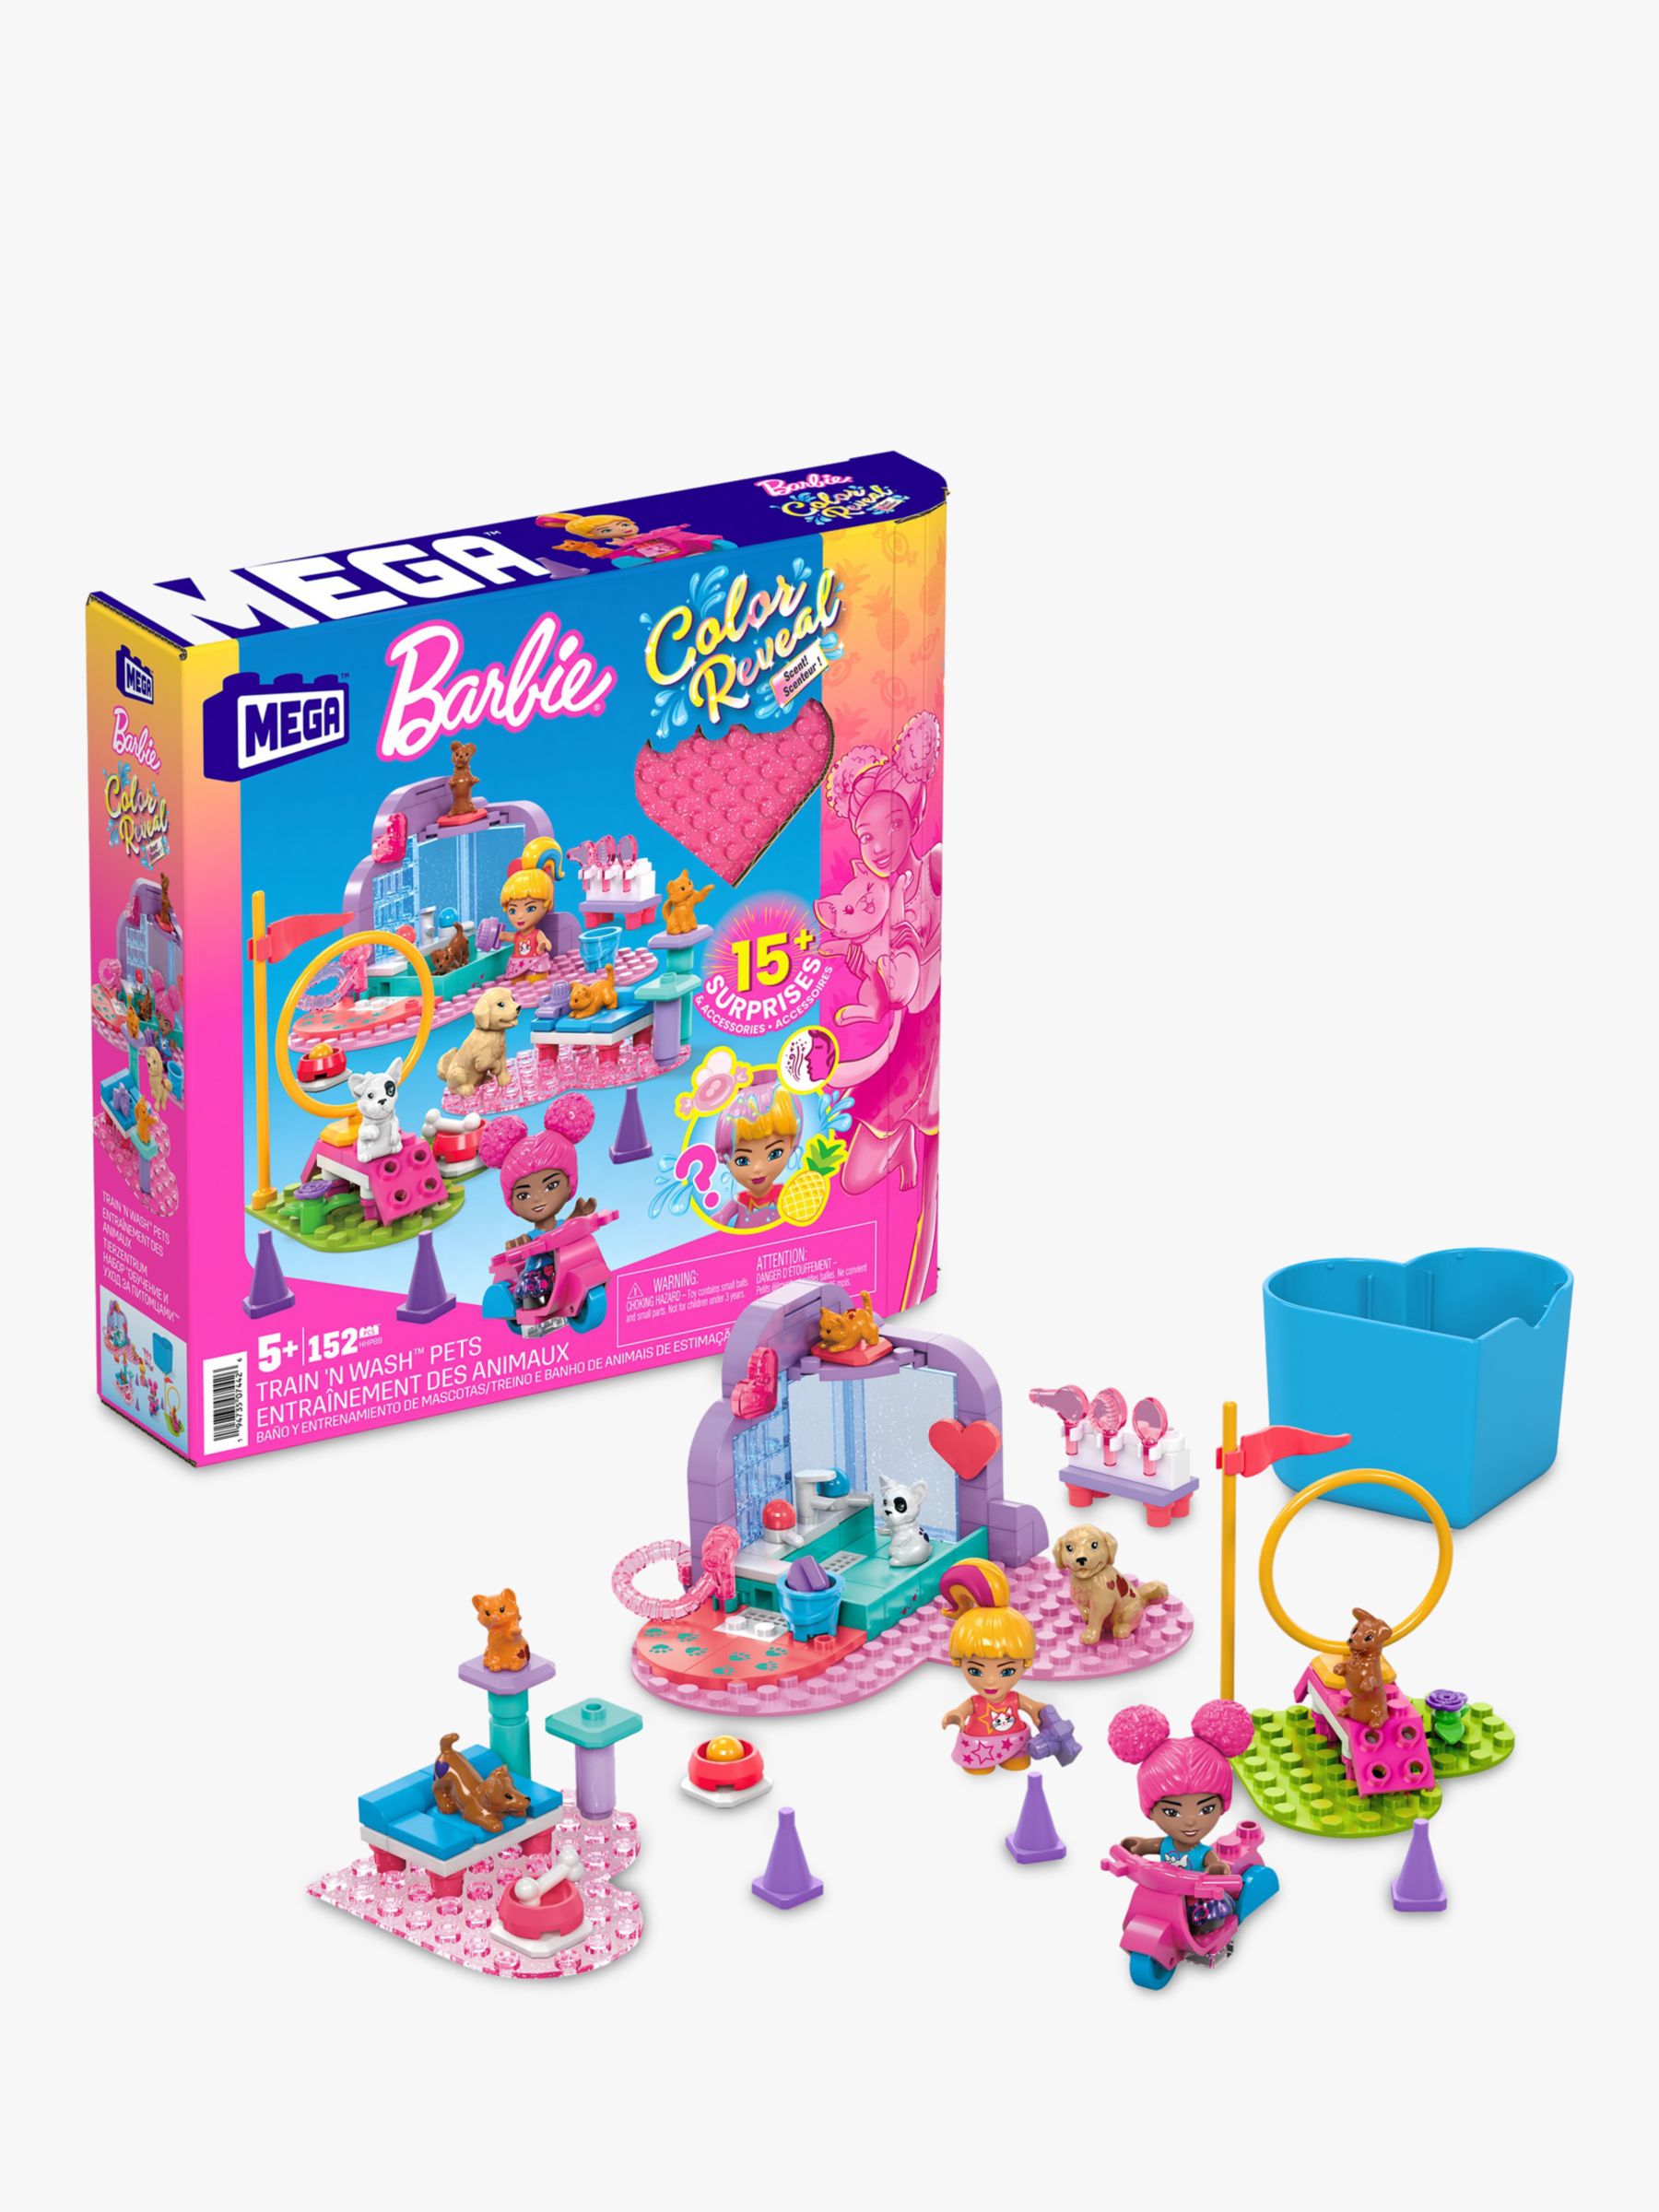 Mega Bloks Barbie Colour Reveal Train N' Wash Pets